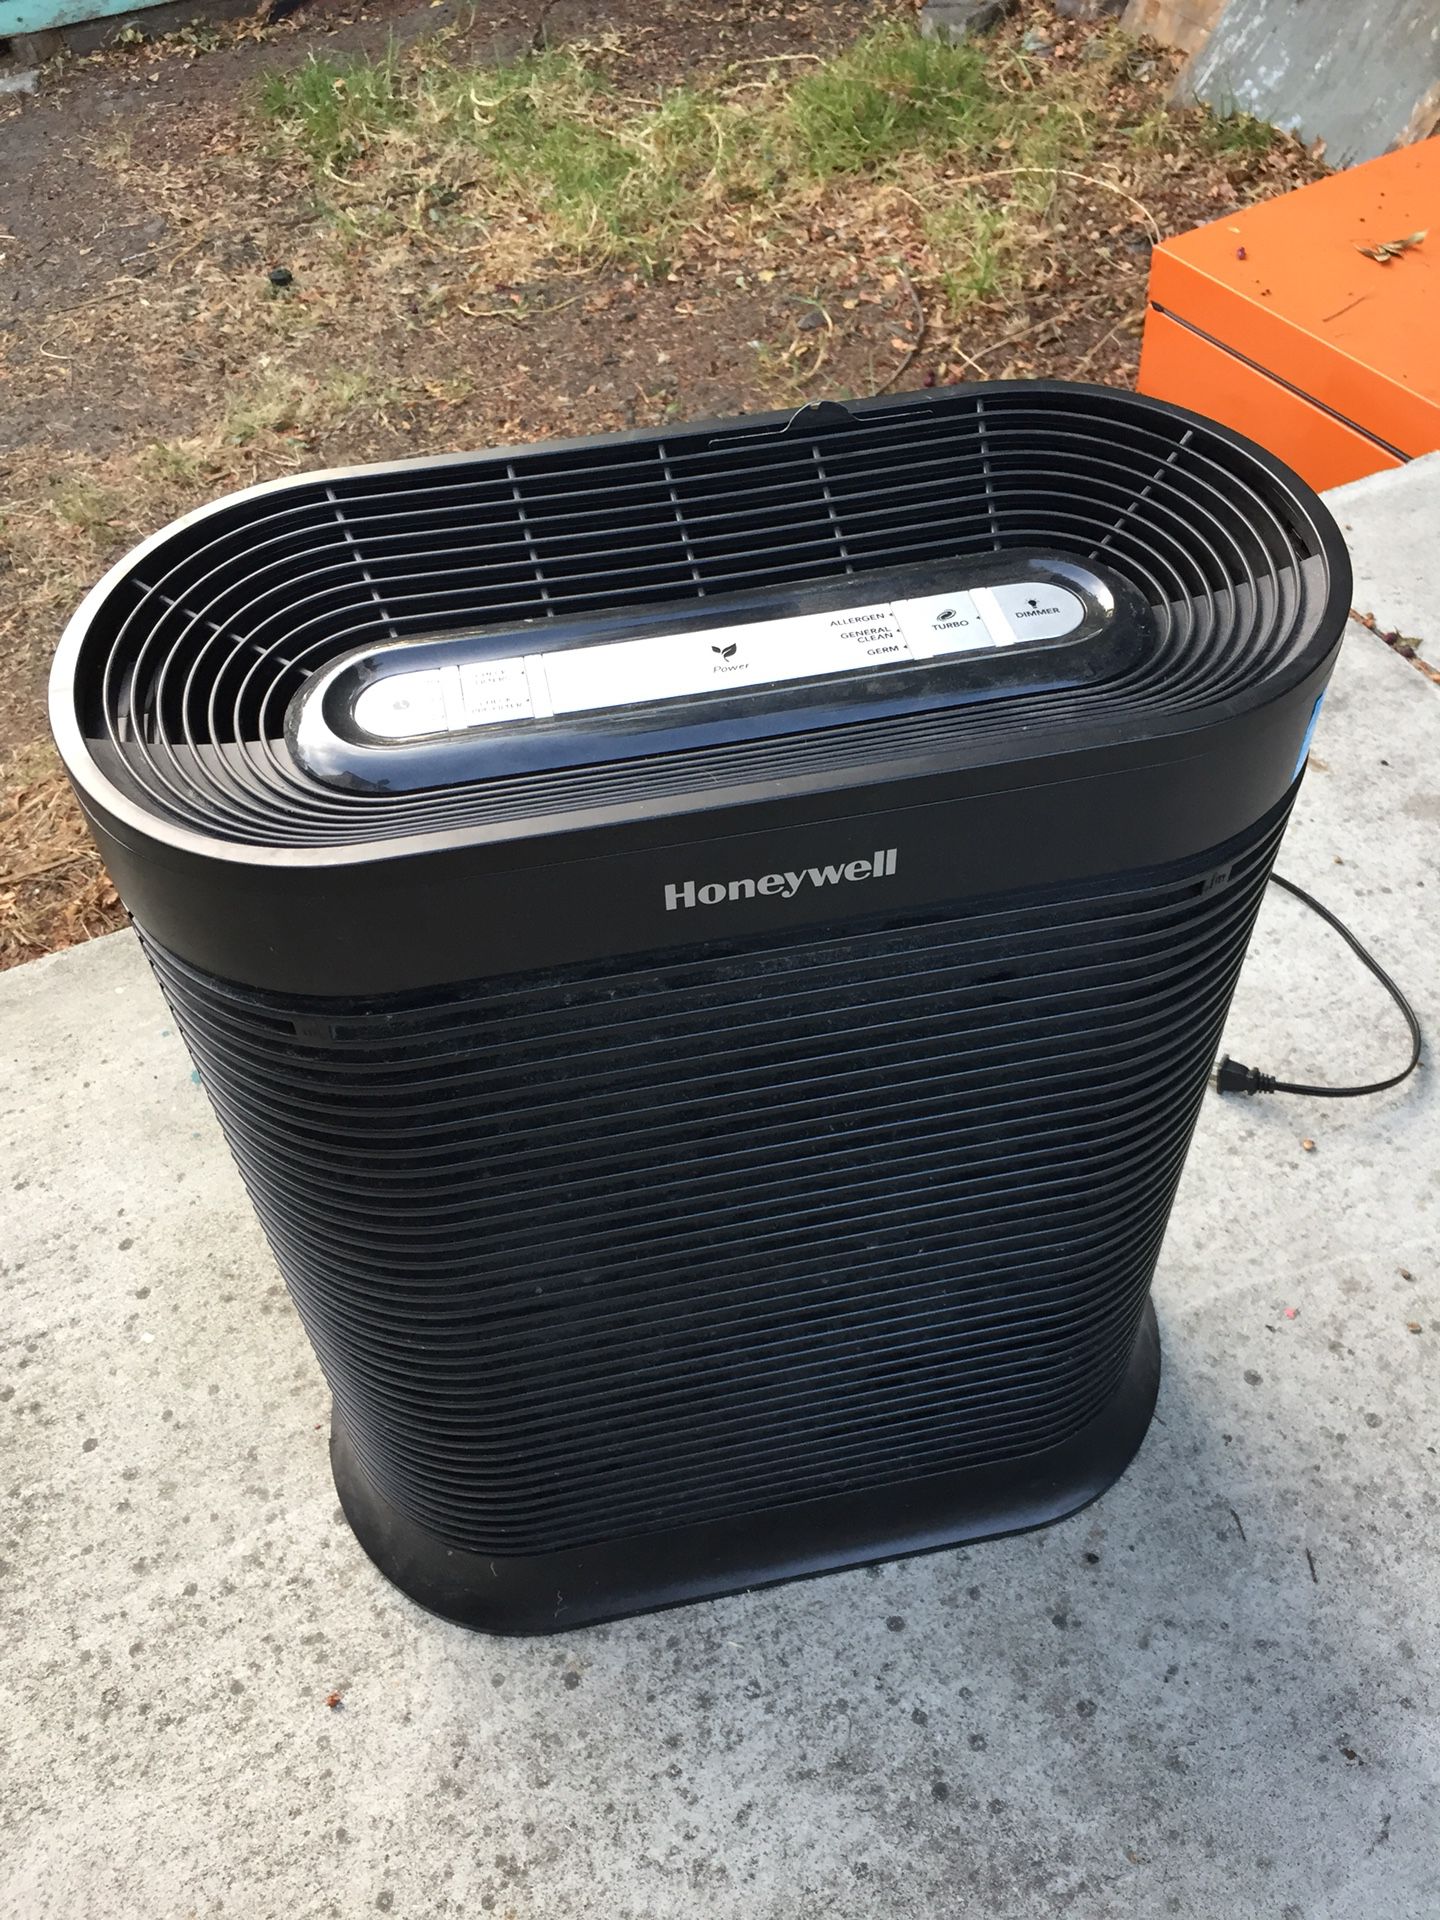 Honeywell Air Filter, True HEPA Air Purifier with Allergen Remover-Black, HPA100, Medium Room